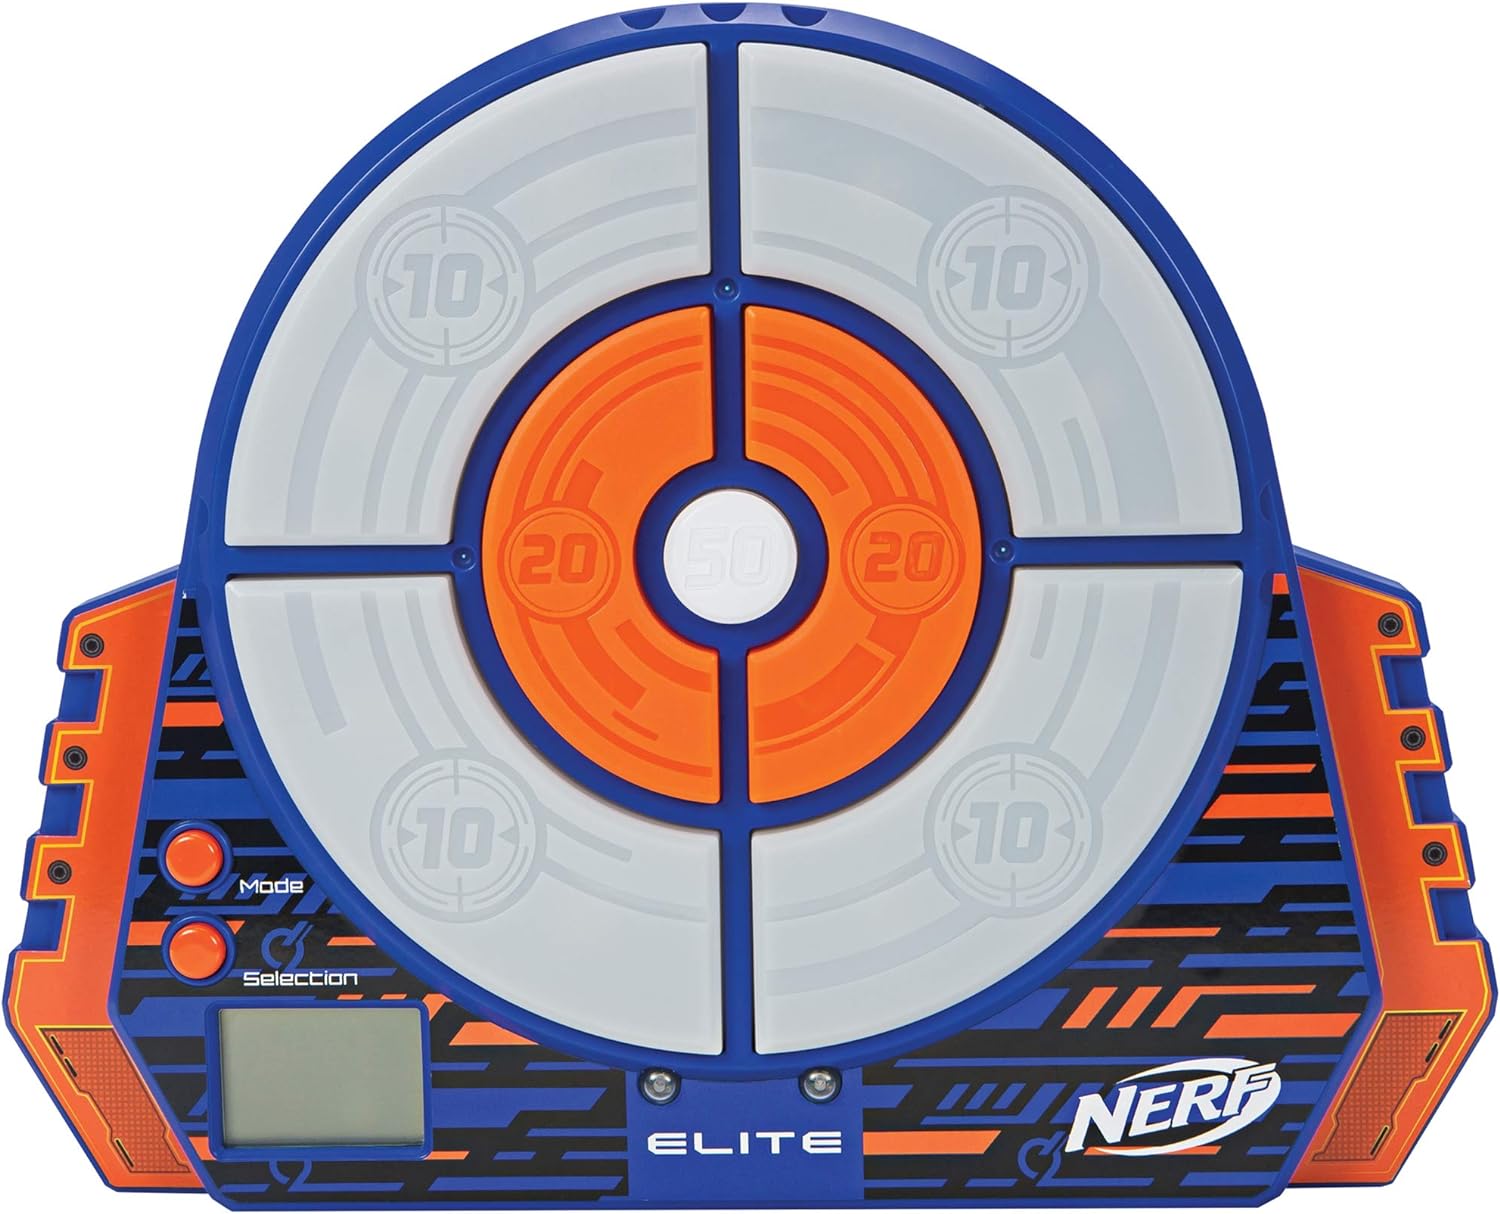 NERF Elite Digital Target Blue/Orange